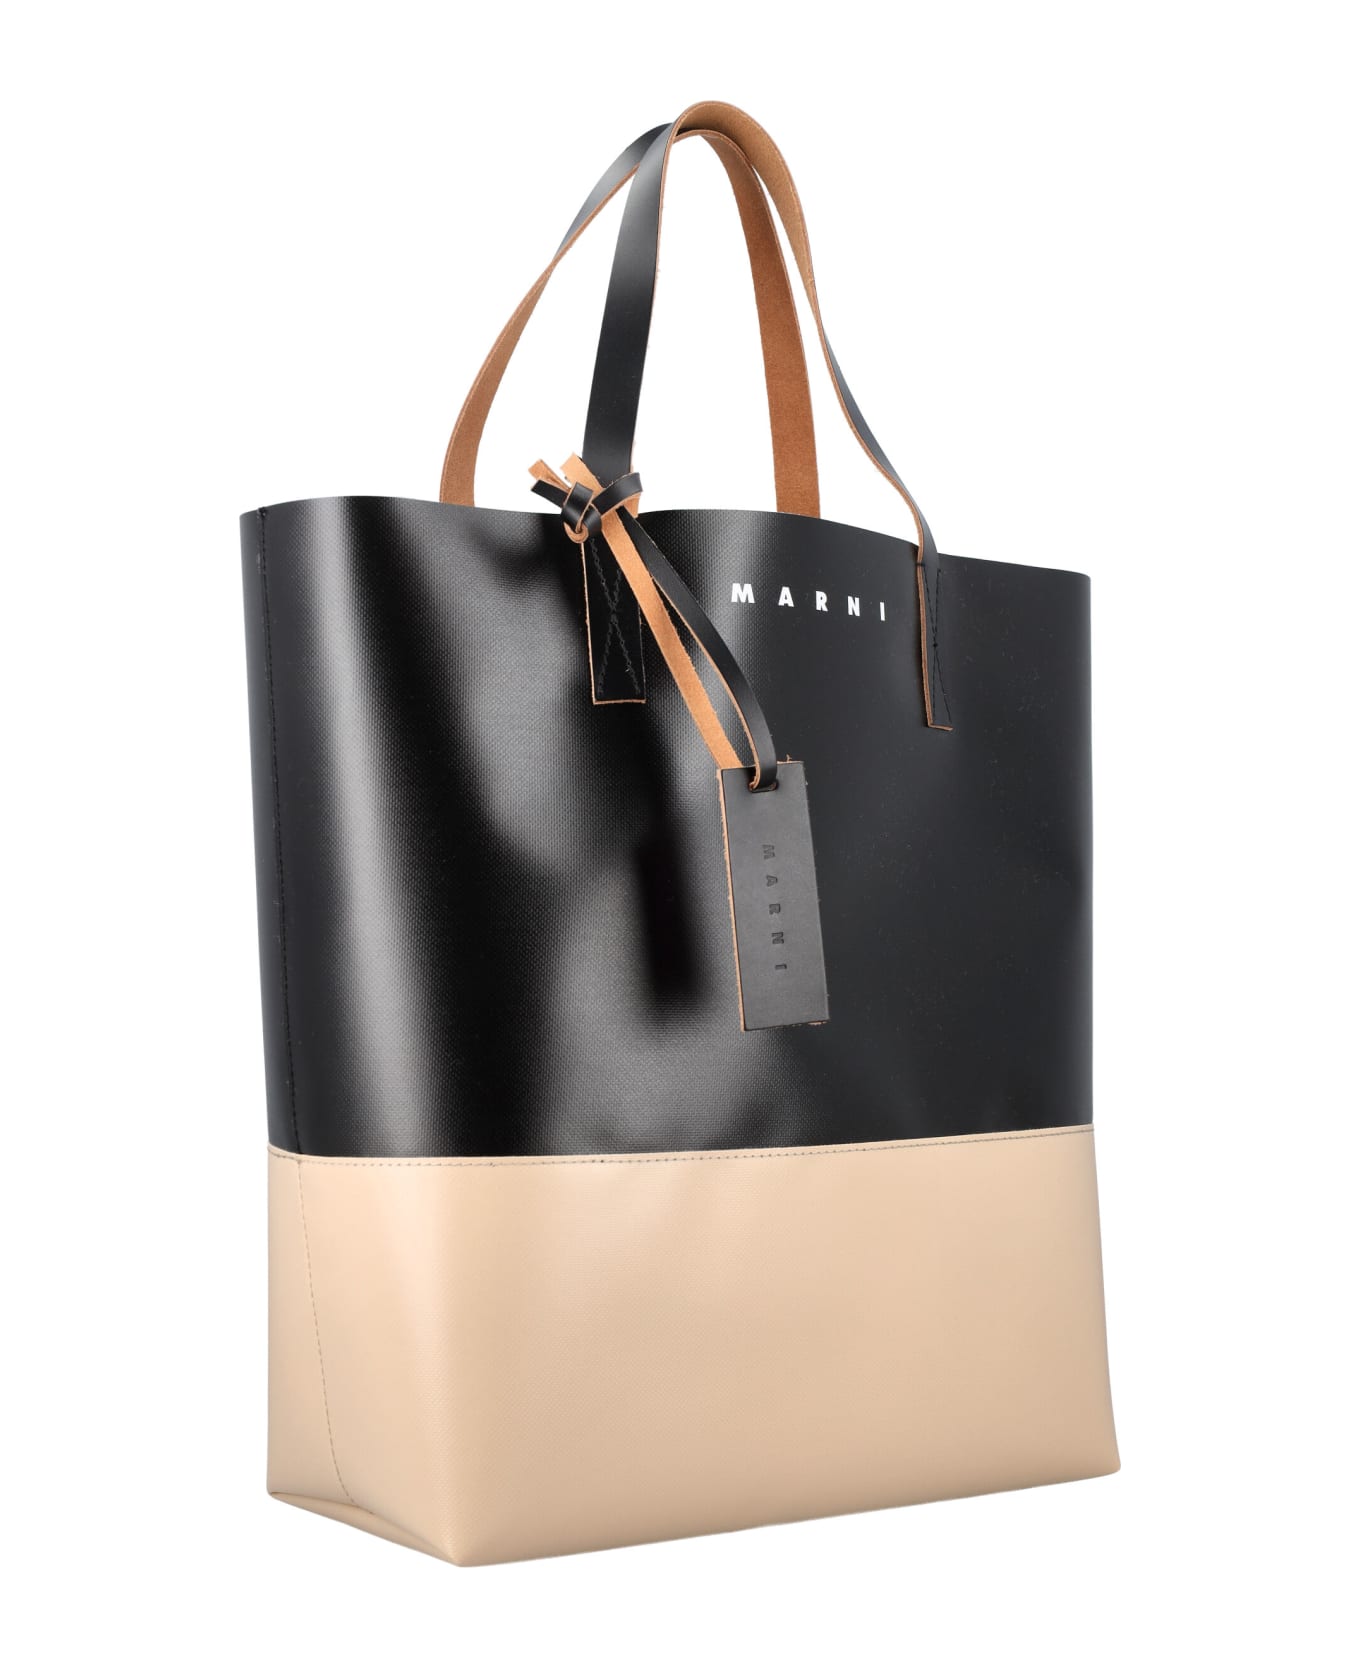 Marni Tribeca Shopping Bag - BLACK CORK トートバッグ